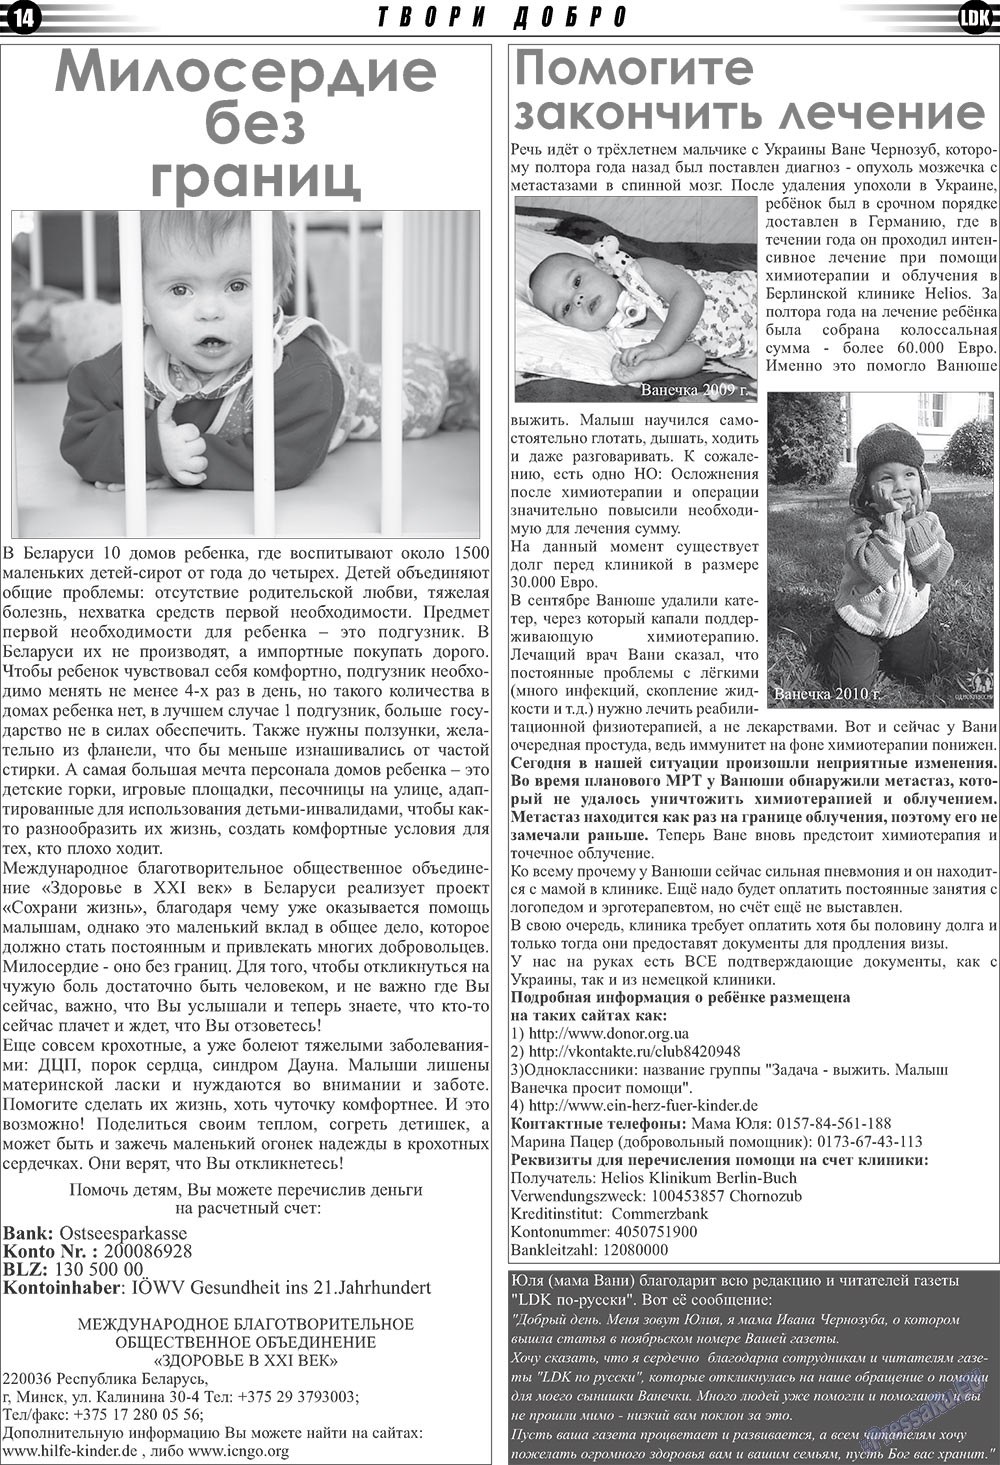 LDK по-русски, газета. 2010 №12 стр.14